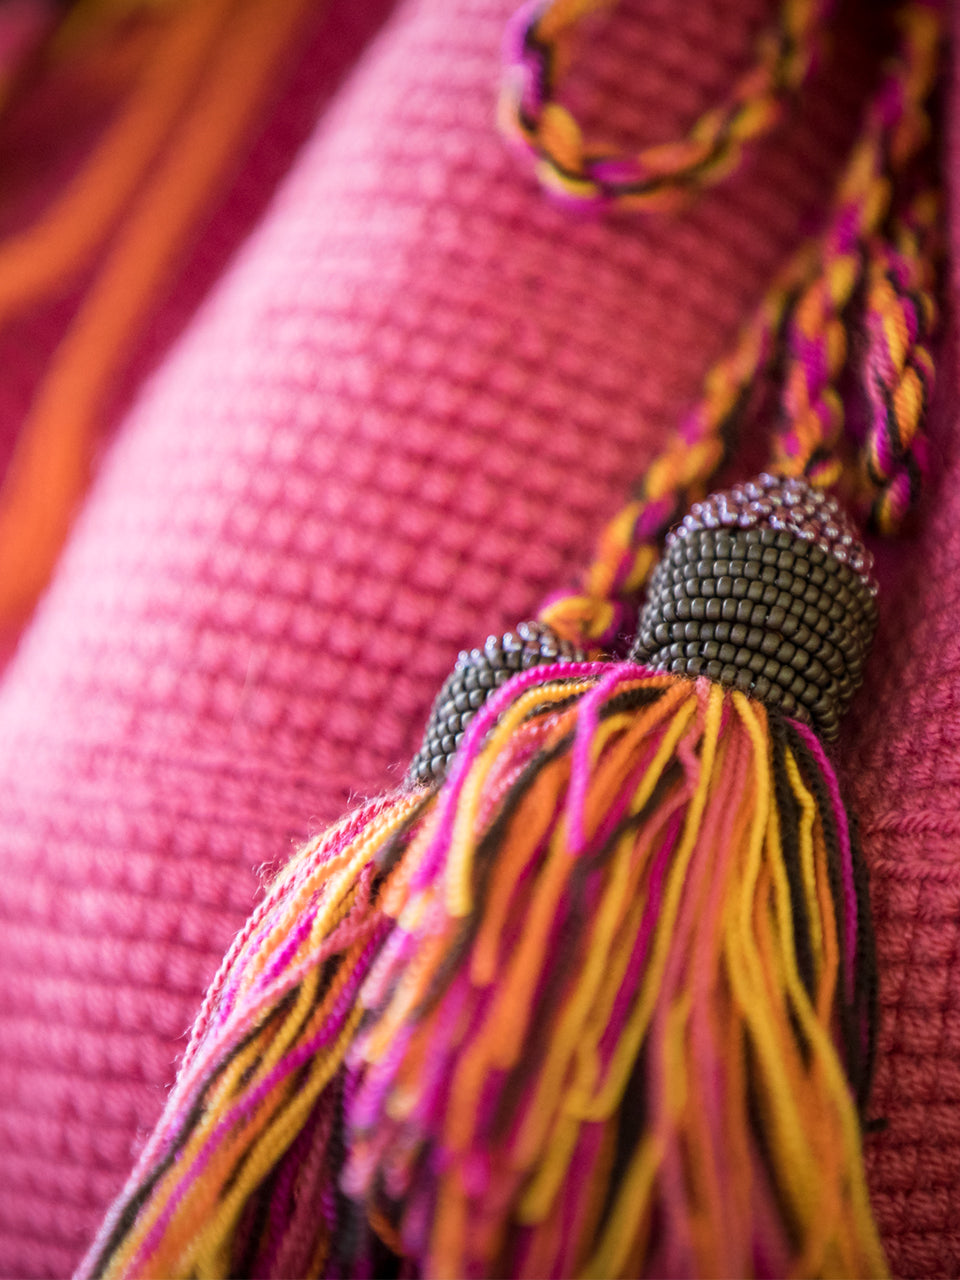 Pink woven shoulder bag with tassels and beads Palmazul Beachwear Lifestyle Wayuu Mochila